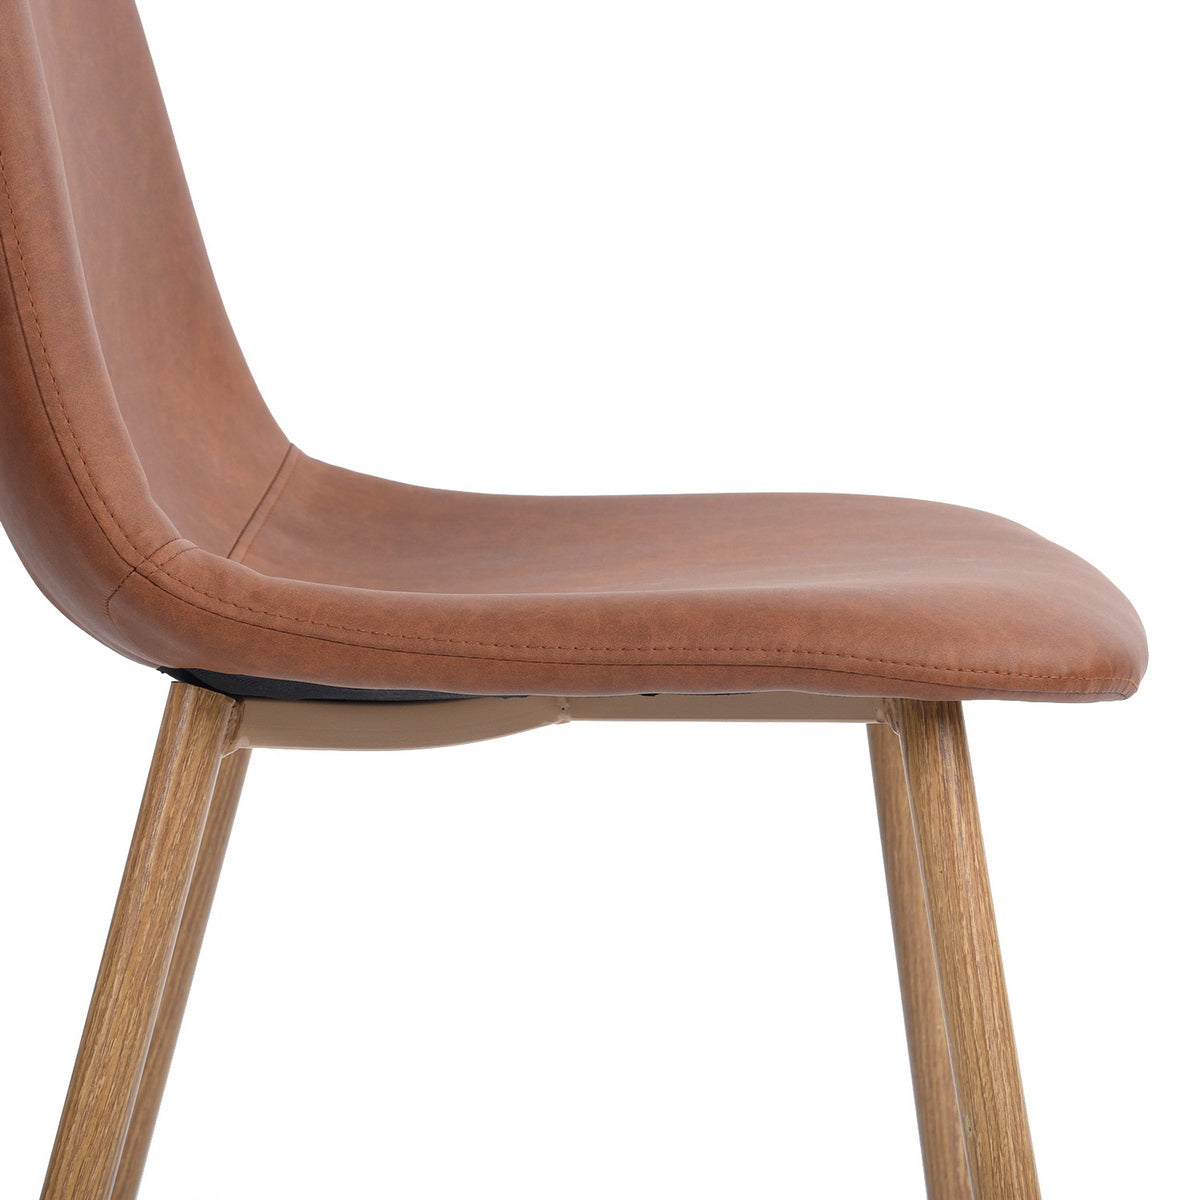 Set of 2 designer fabric dining chairs - CHARLTON